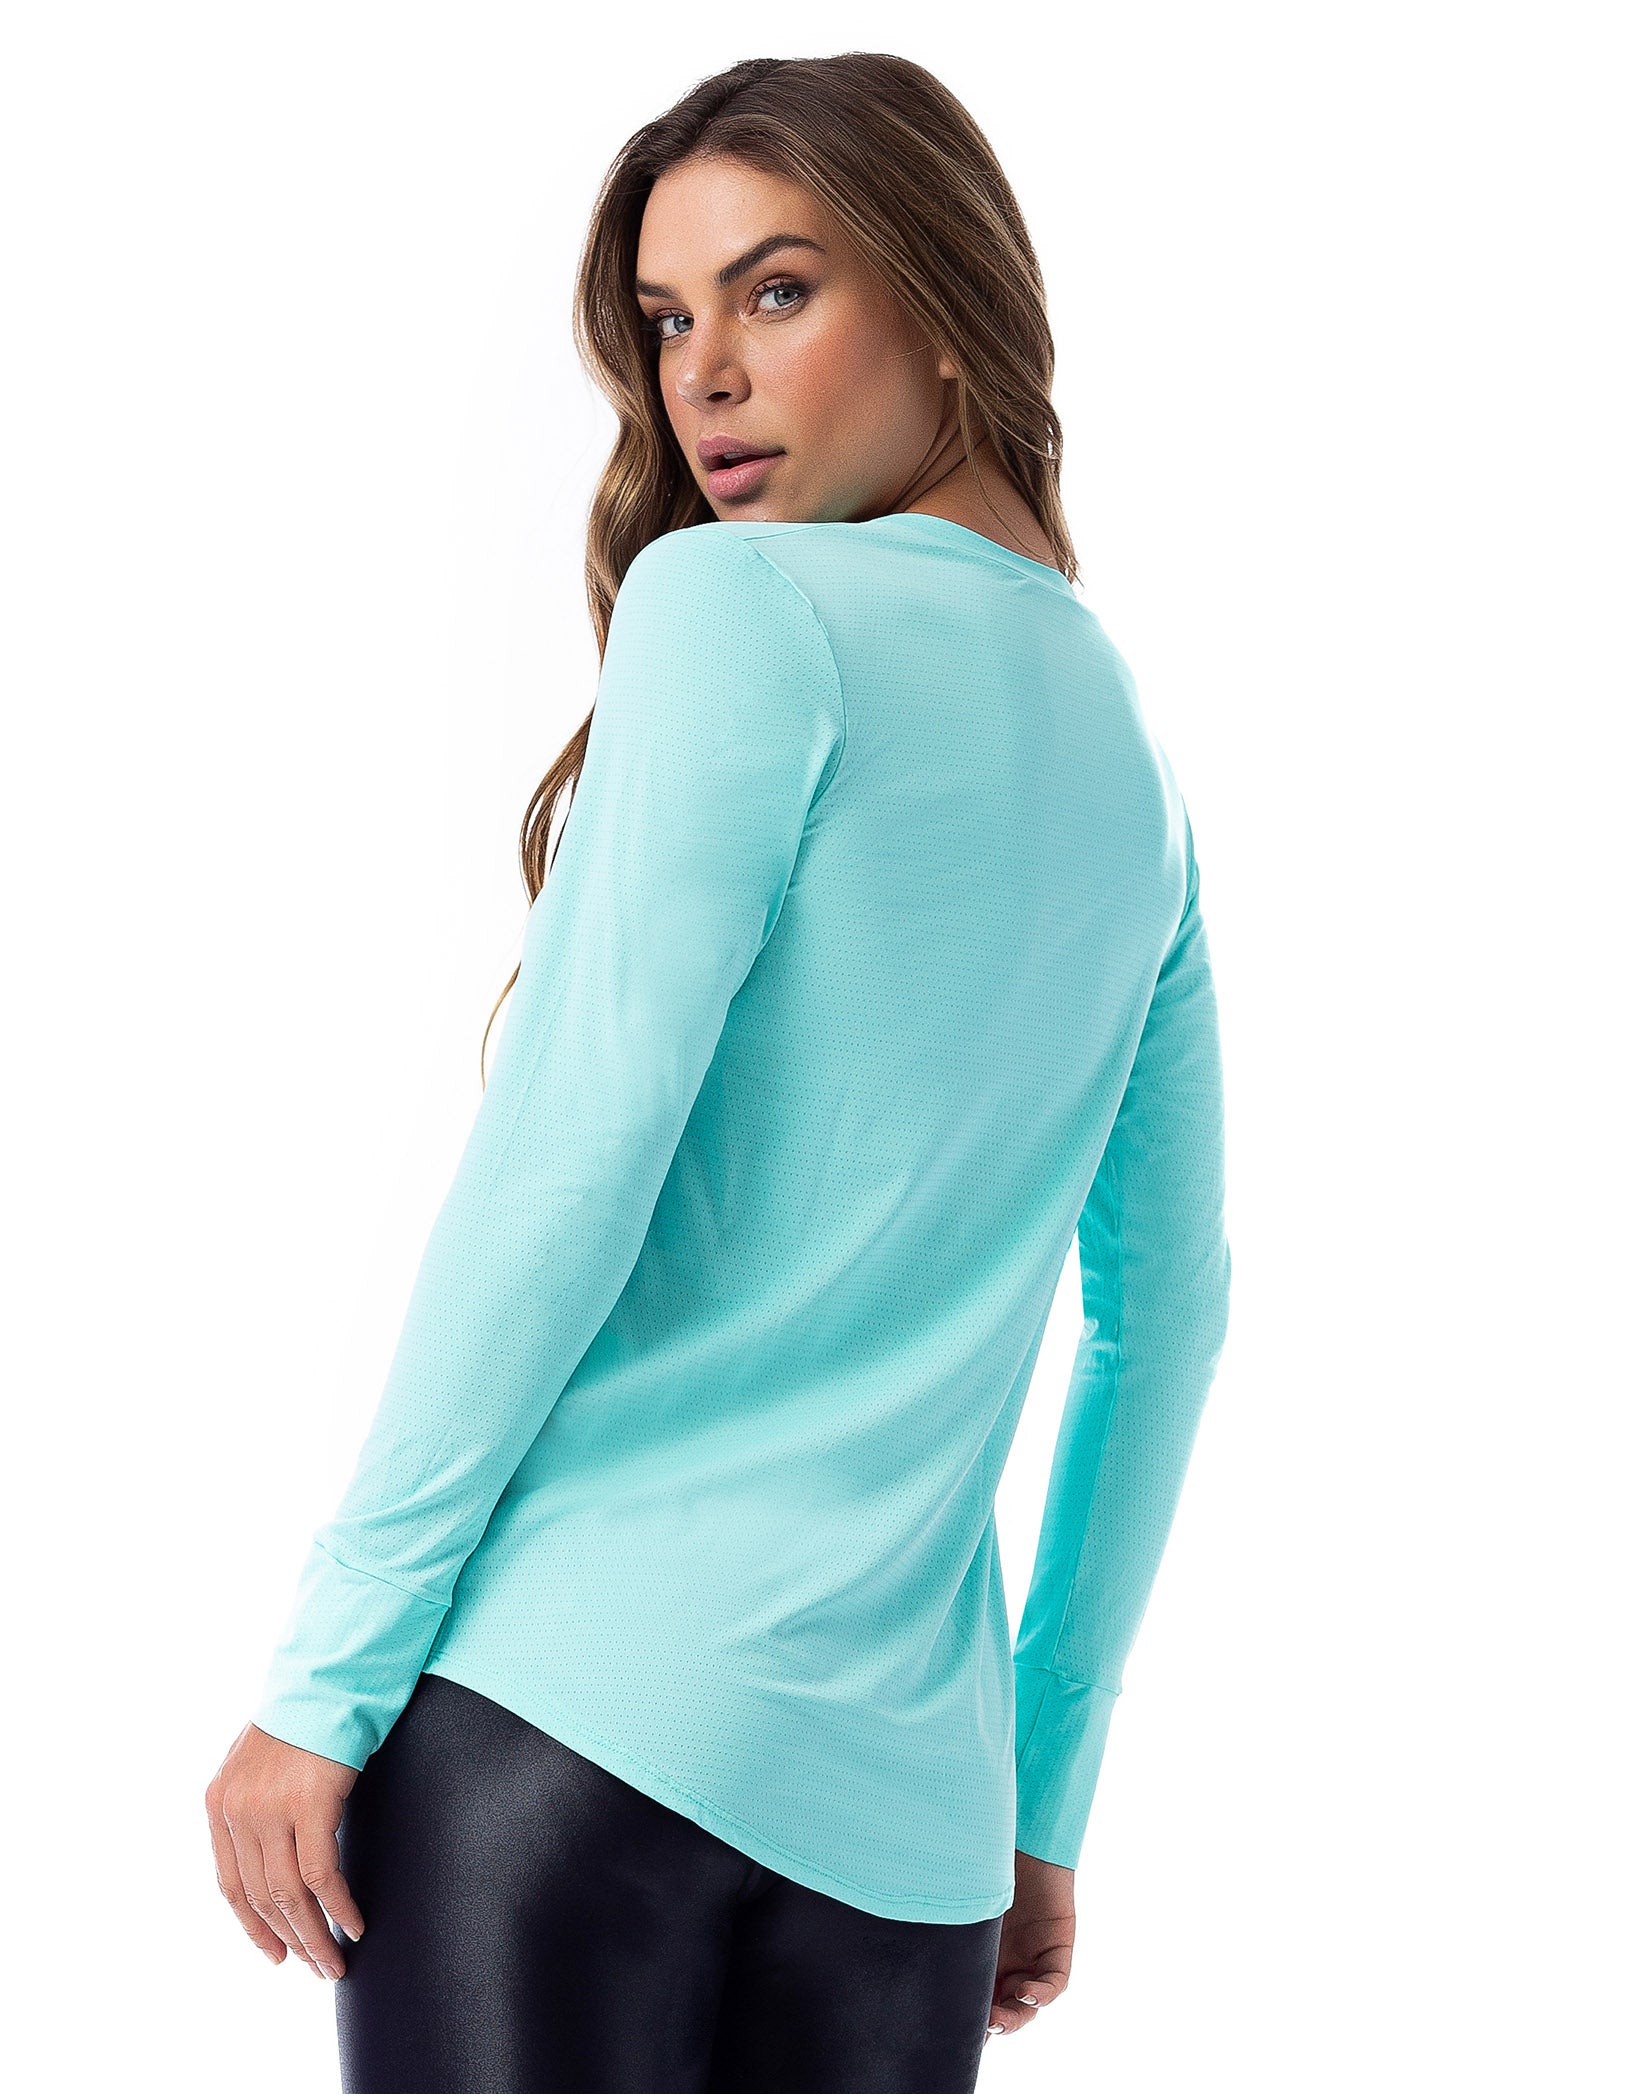 Vestem - Shirt Dry Fit Long Sleeve Janice Verde Frais - BML16C0248